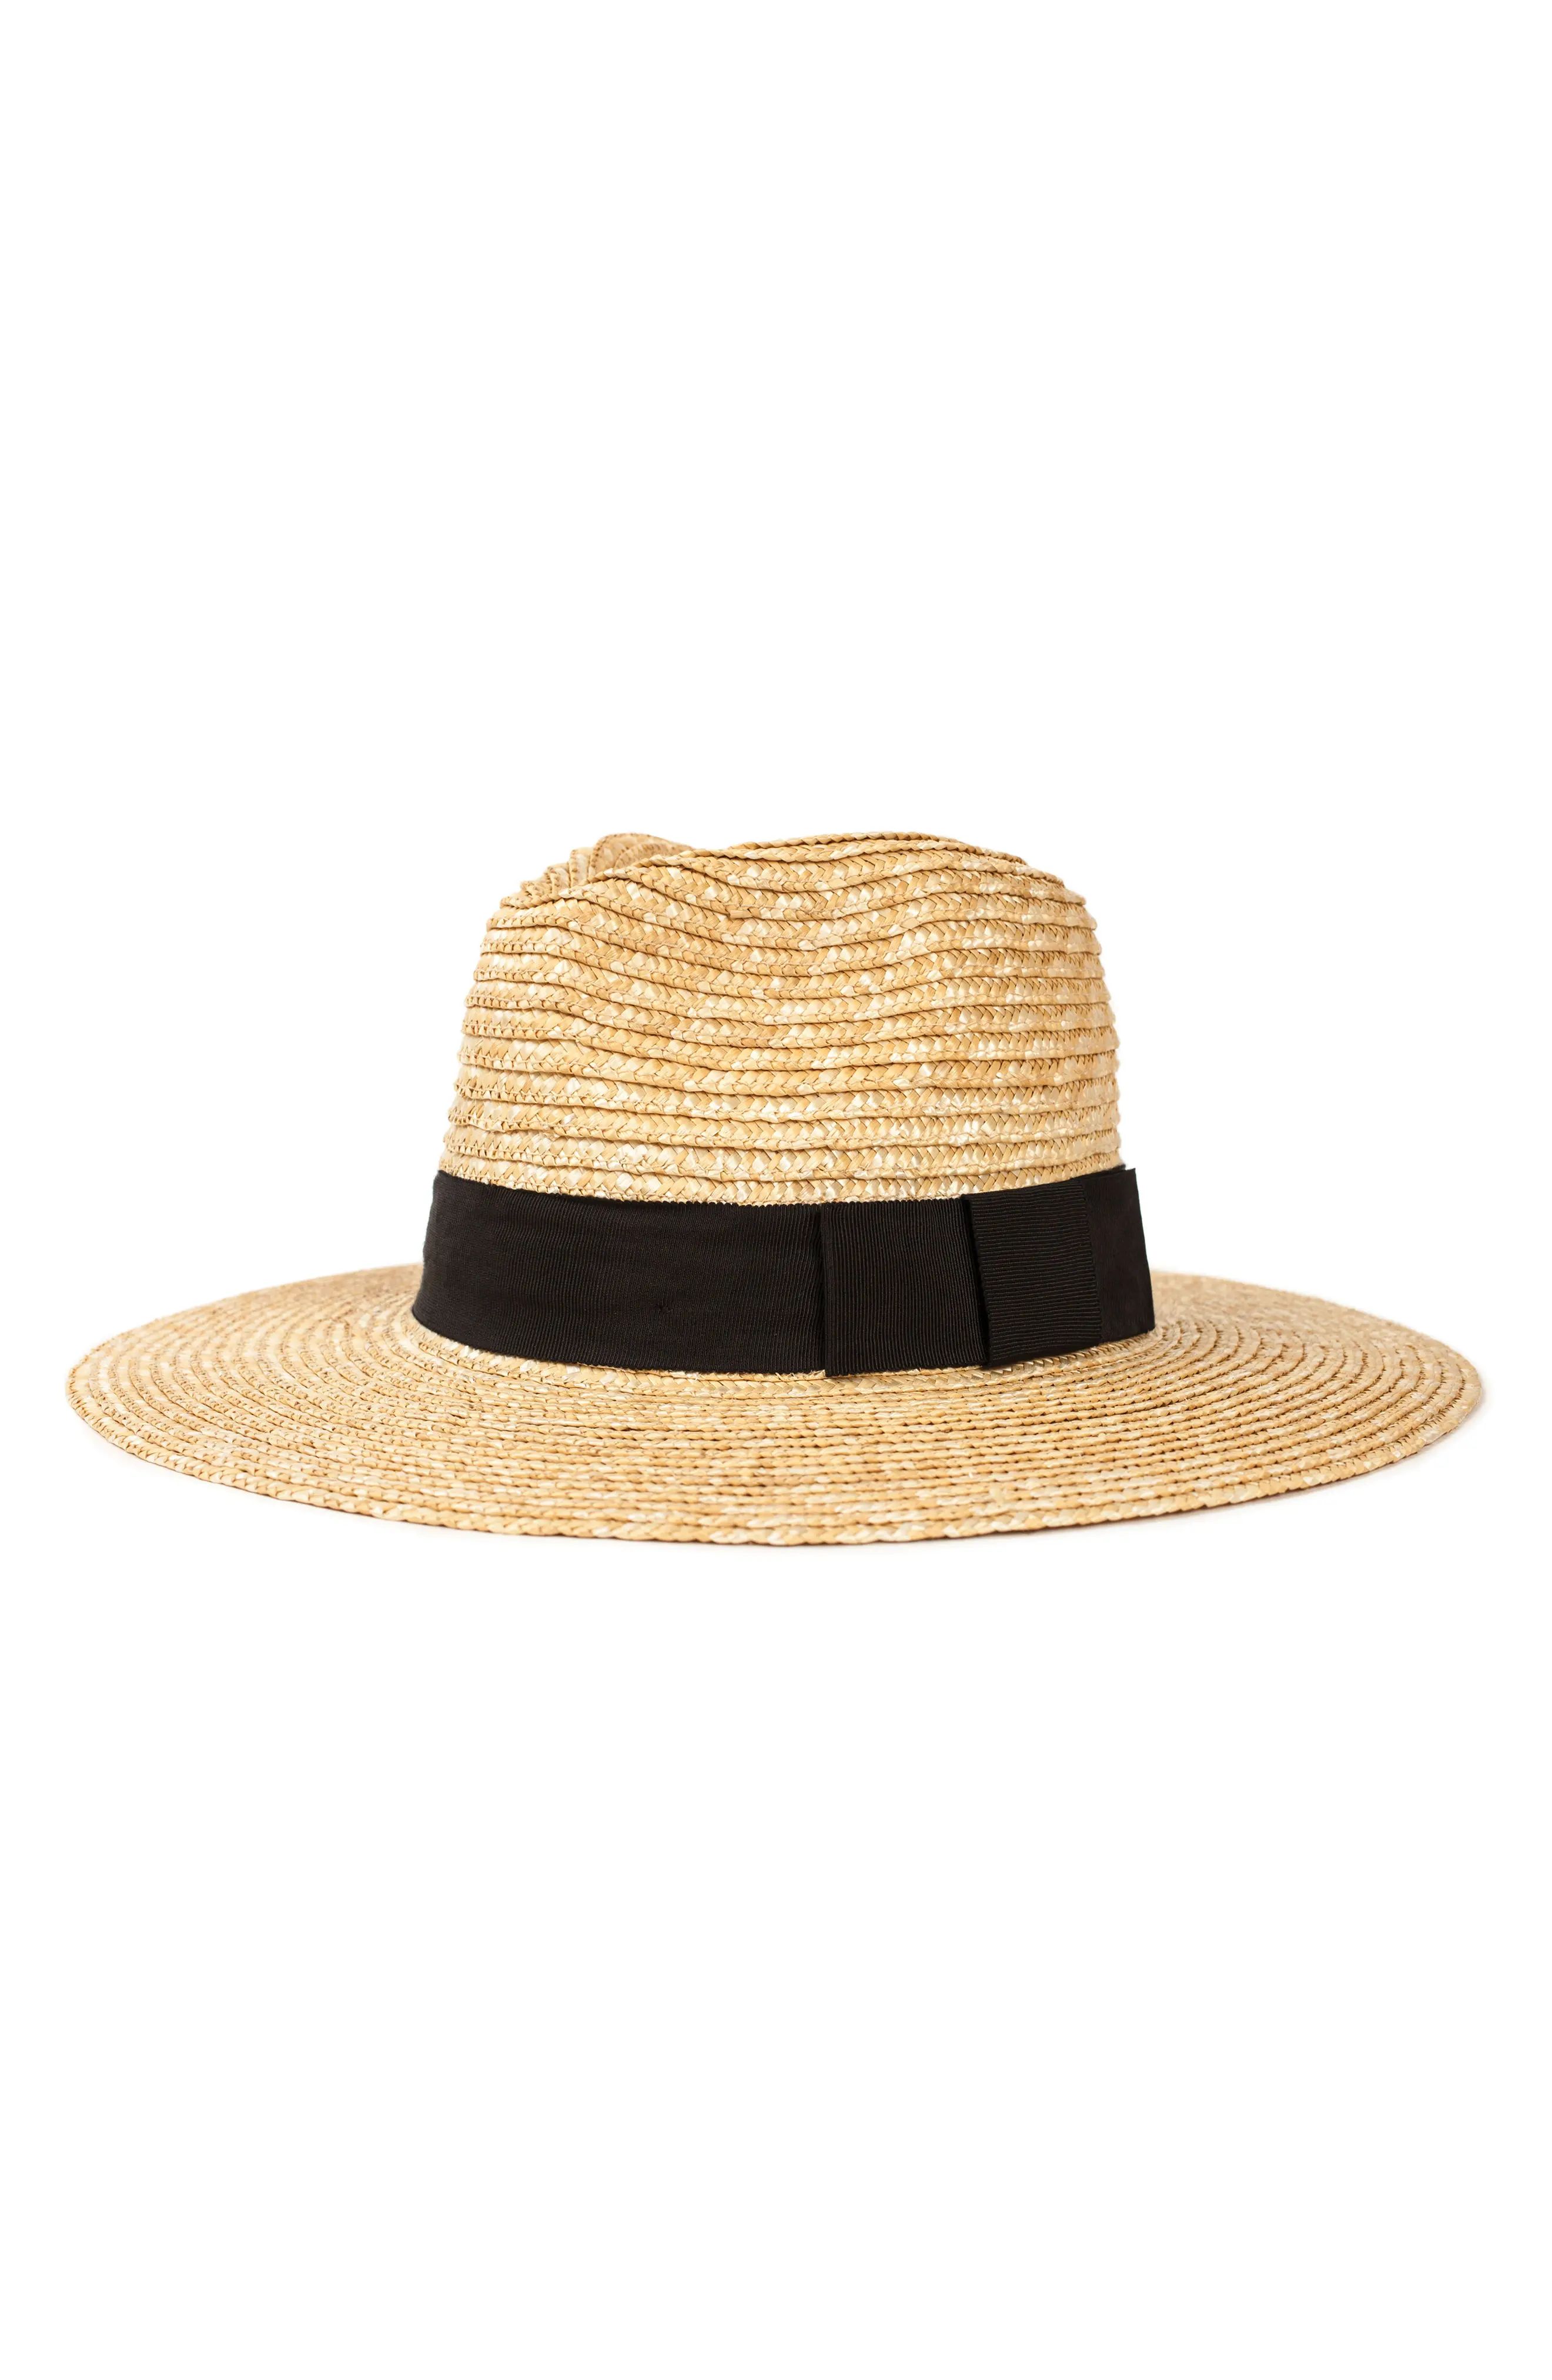 Brixton Joanna Straw Hat, Size Large in Honey/black at Nordstrom | Nordstrom